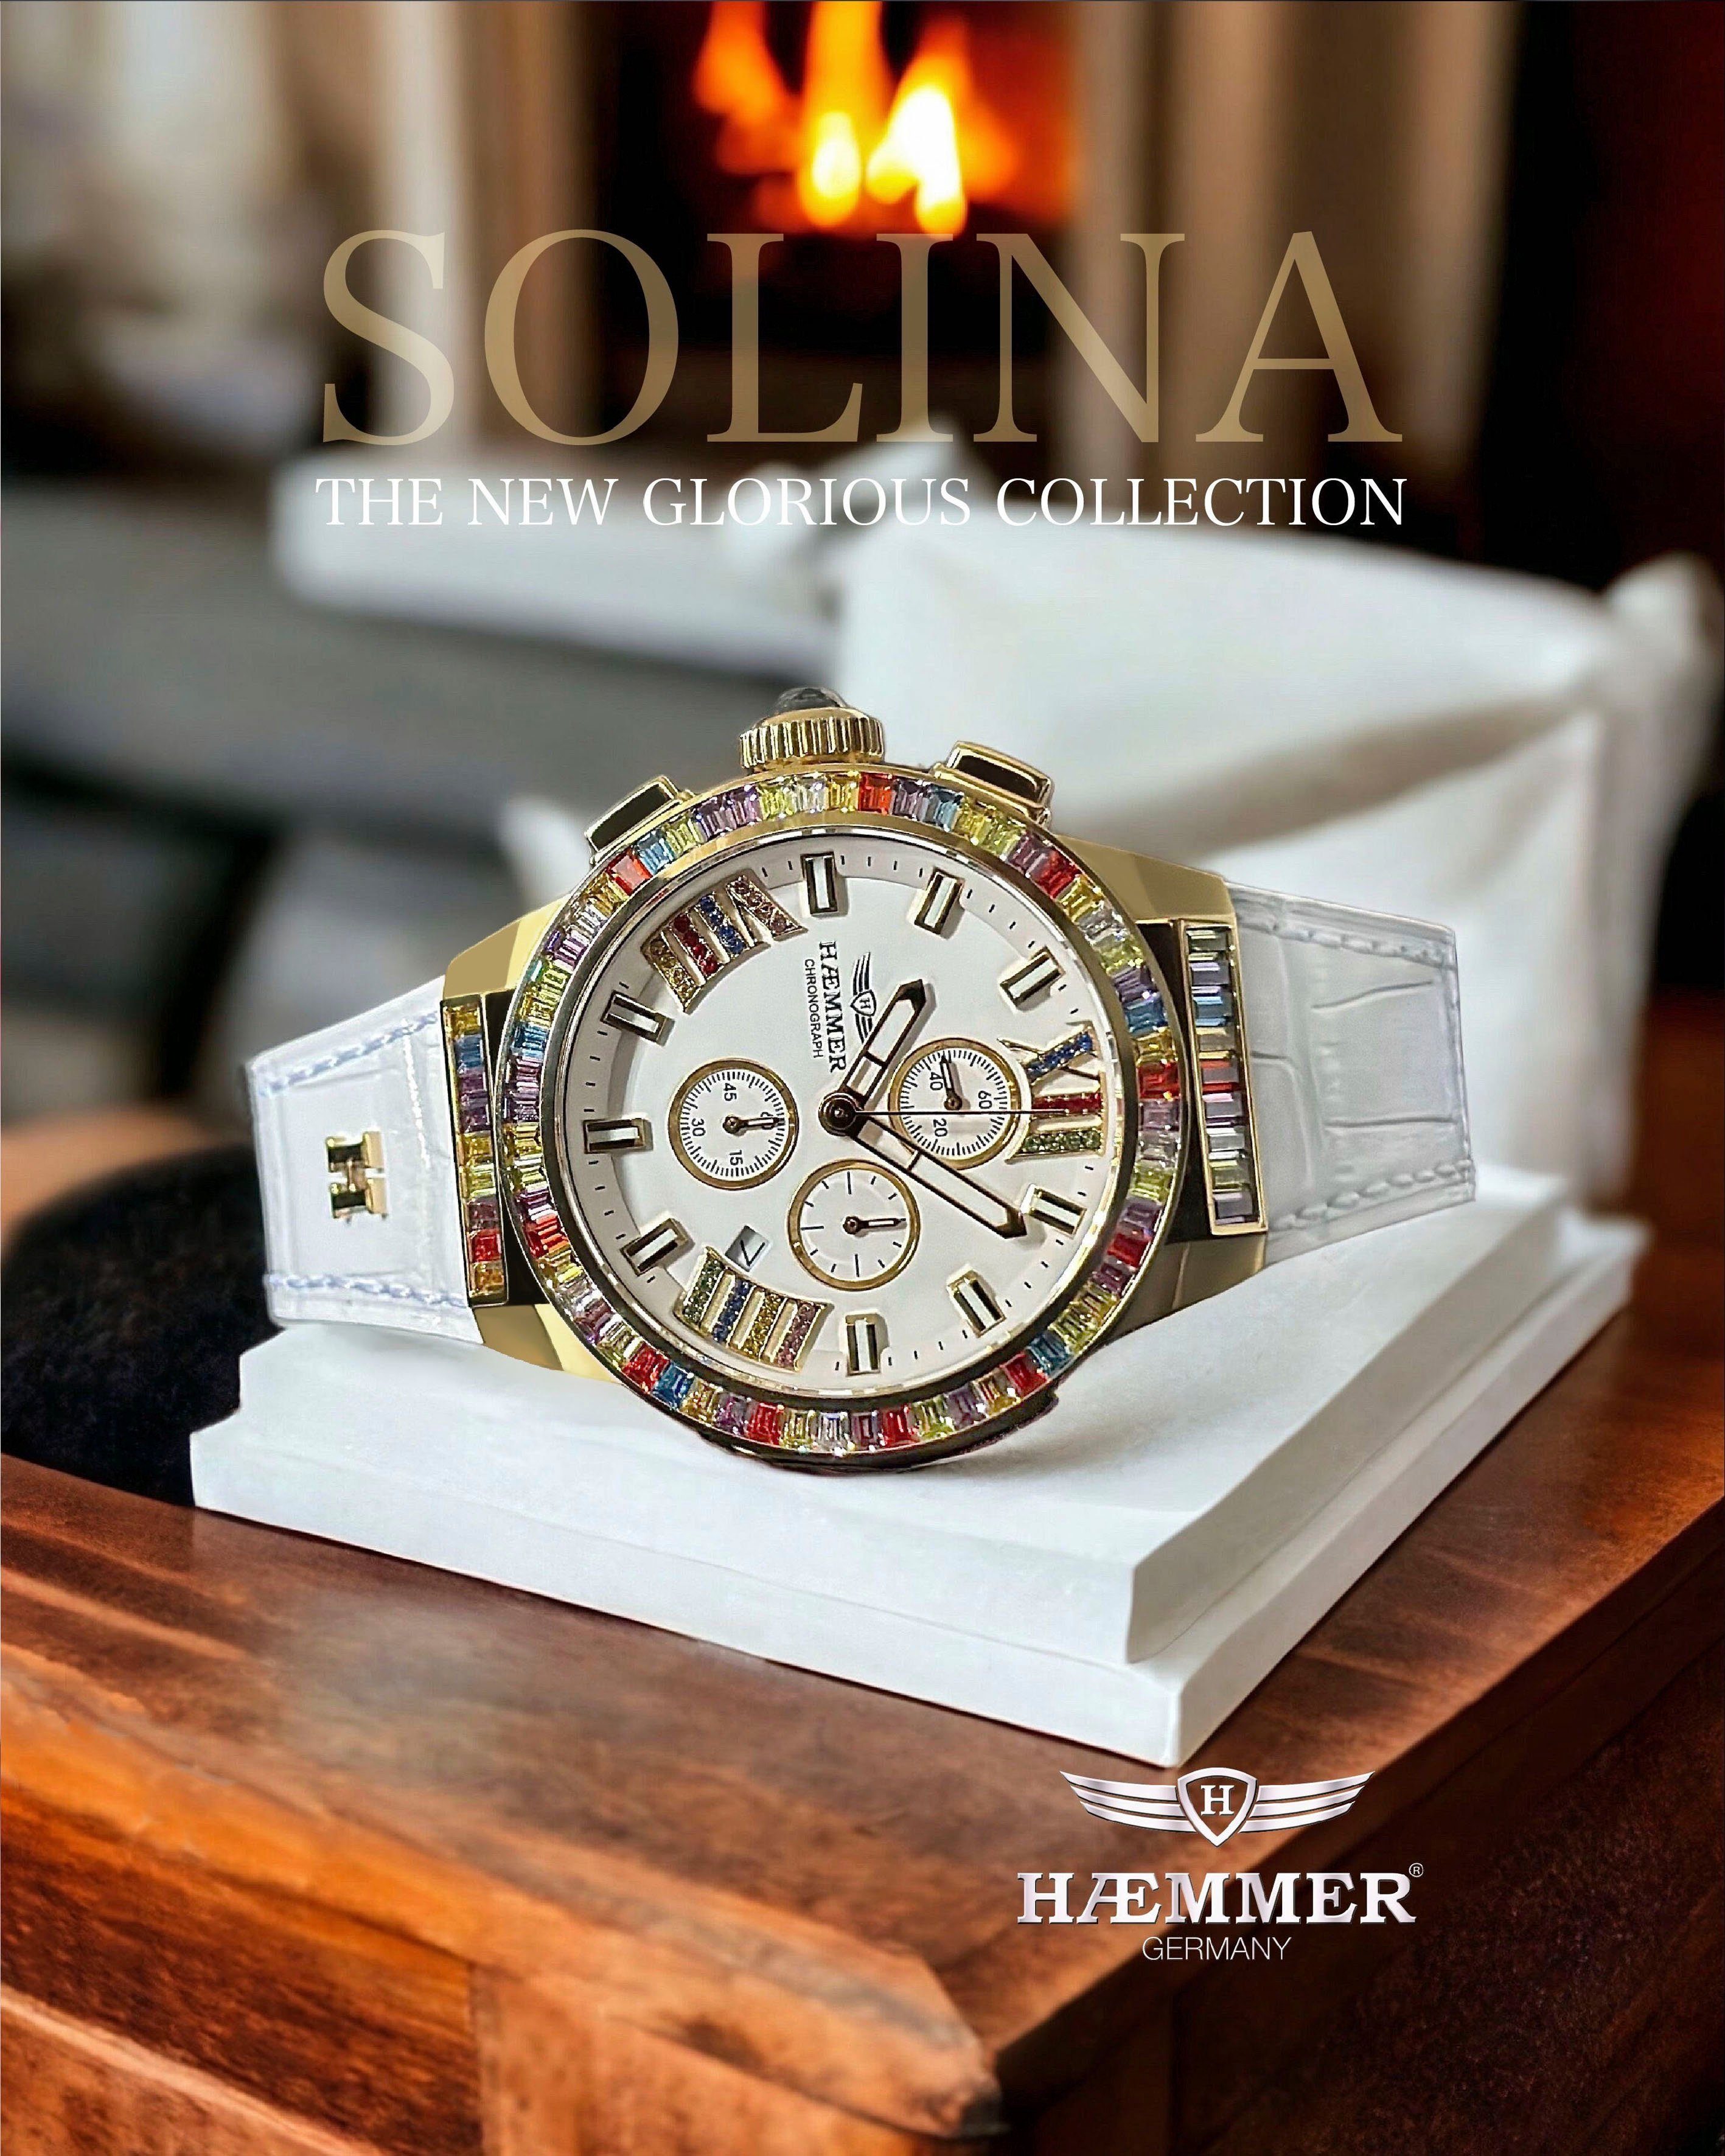 SOLINA, HAEMMER GERMANY Chronograph GR013